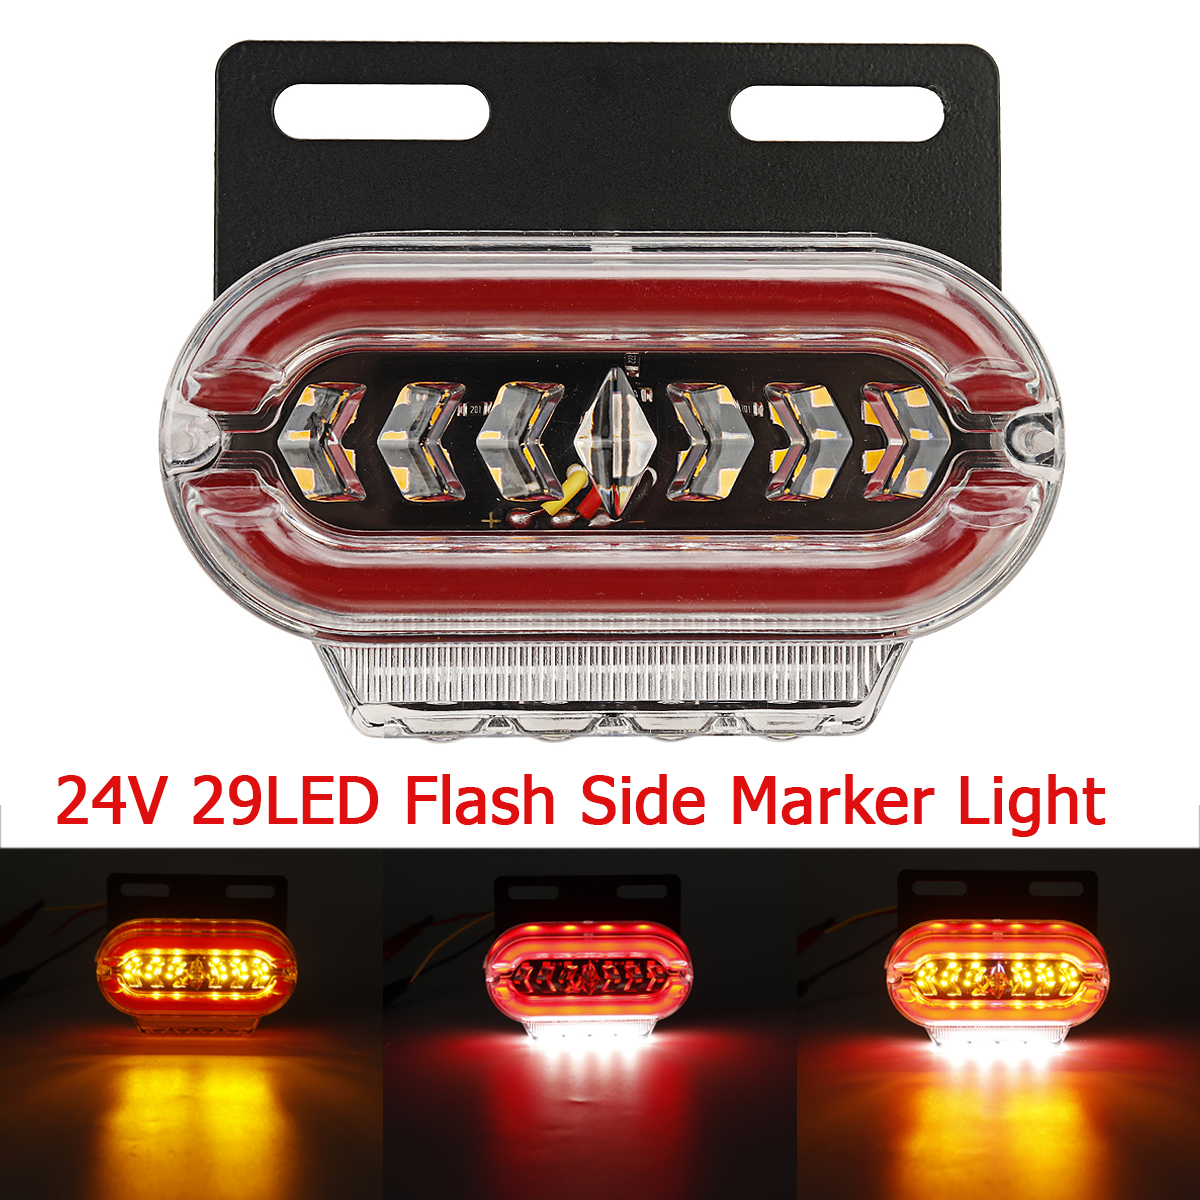 29LED 24V Flash Side Marker Light Signal Lamp Indicator For Truck Trailers